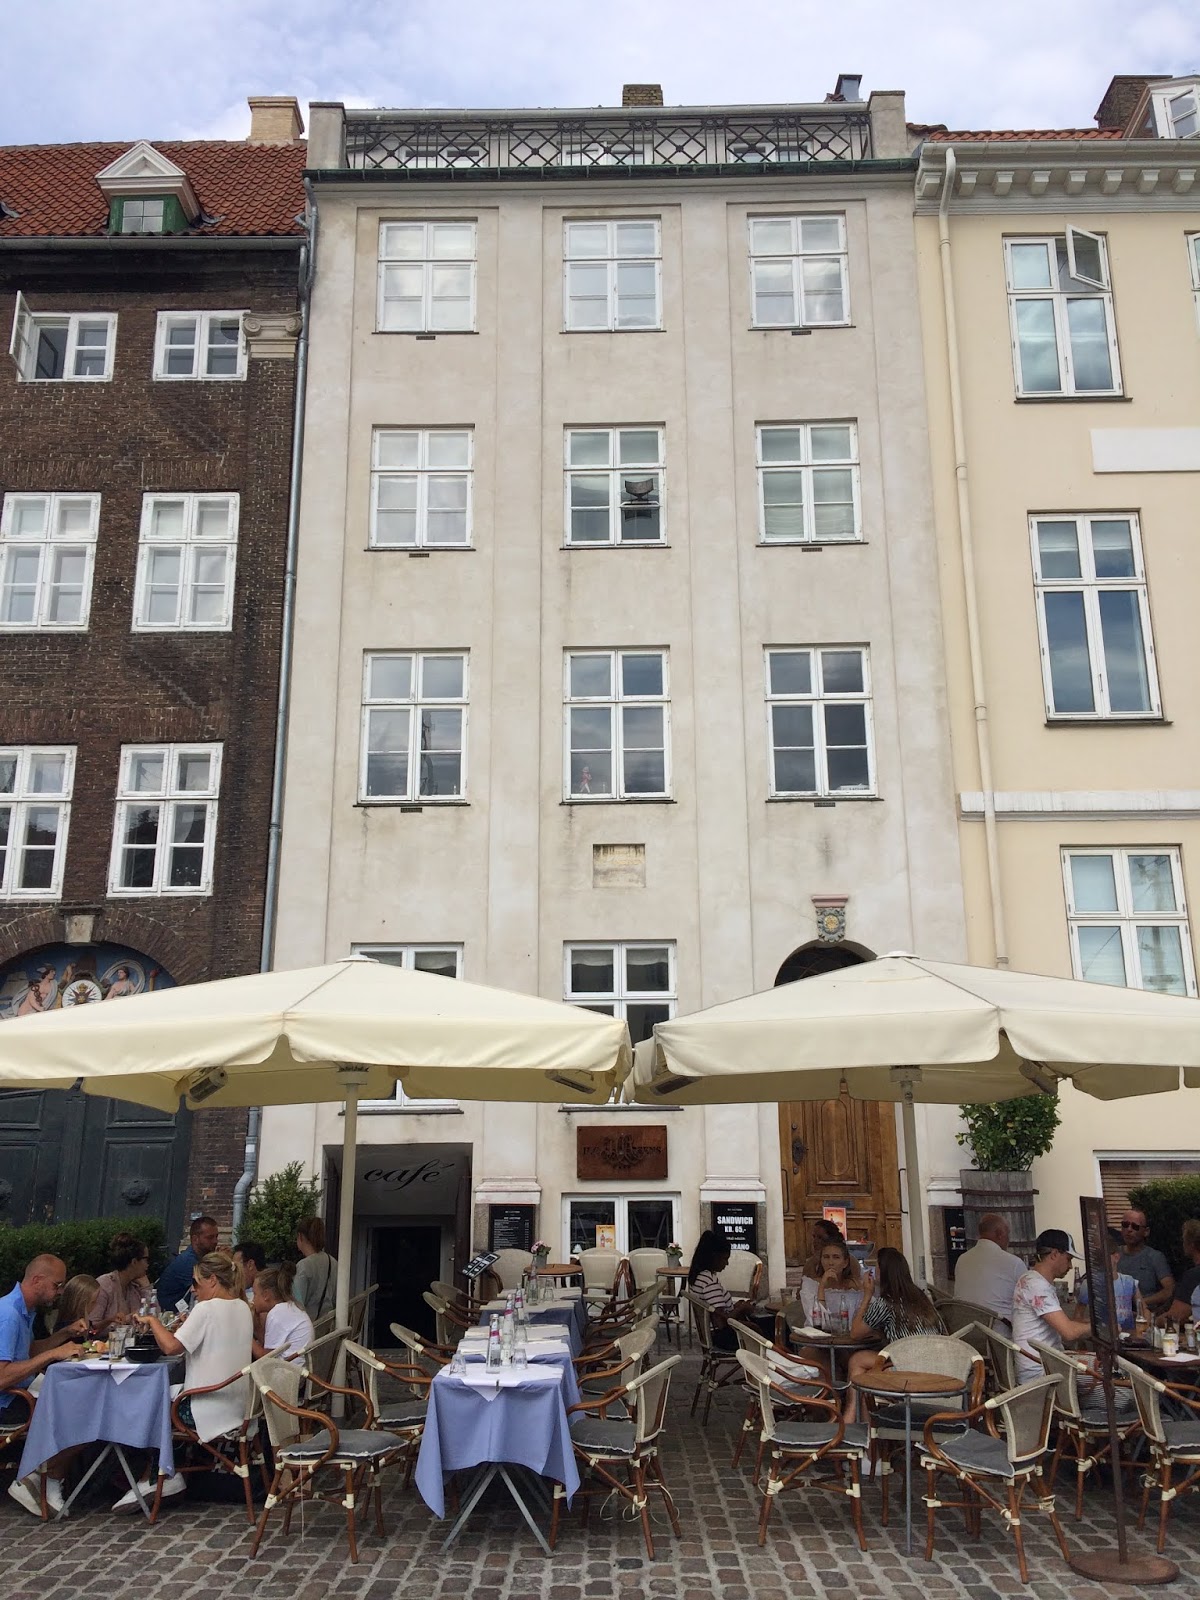 The Hans Christian Handersen Cafe